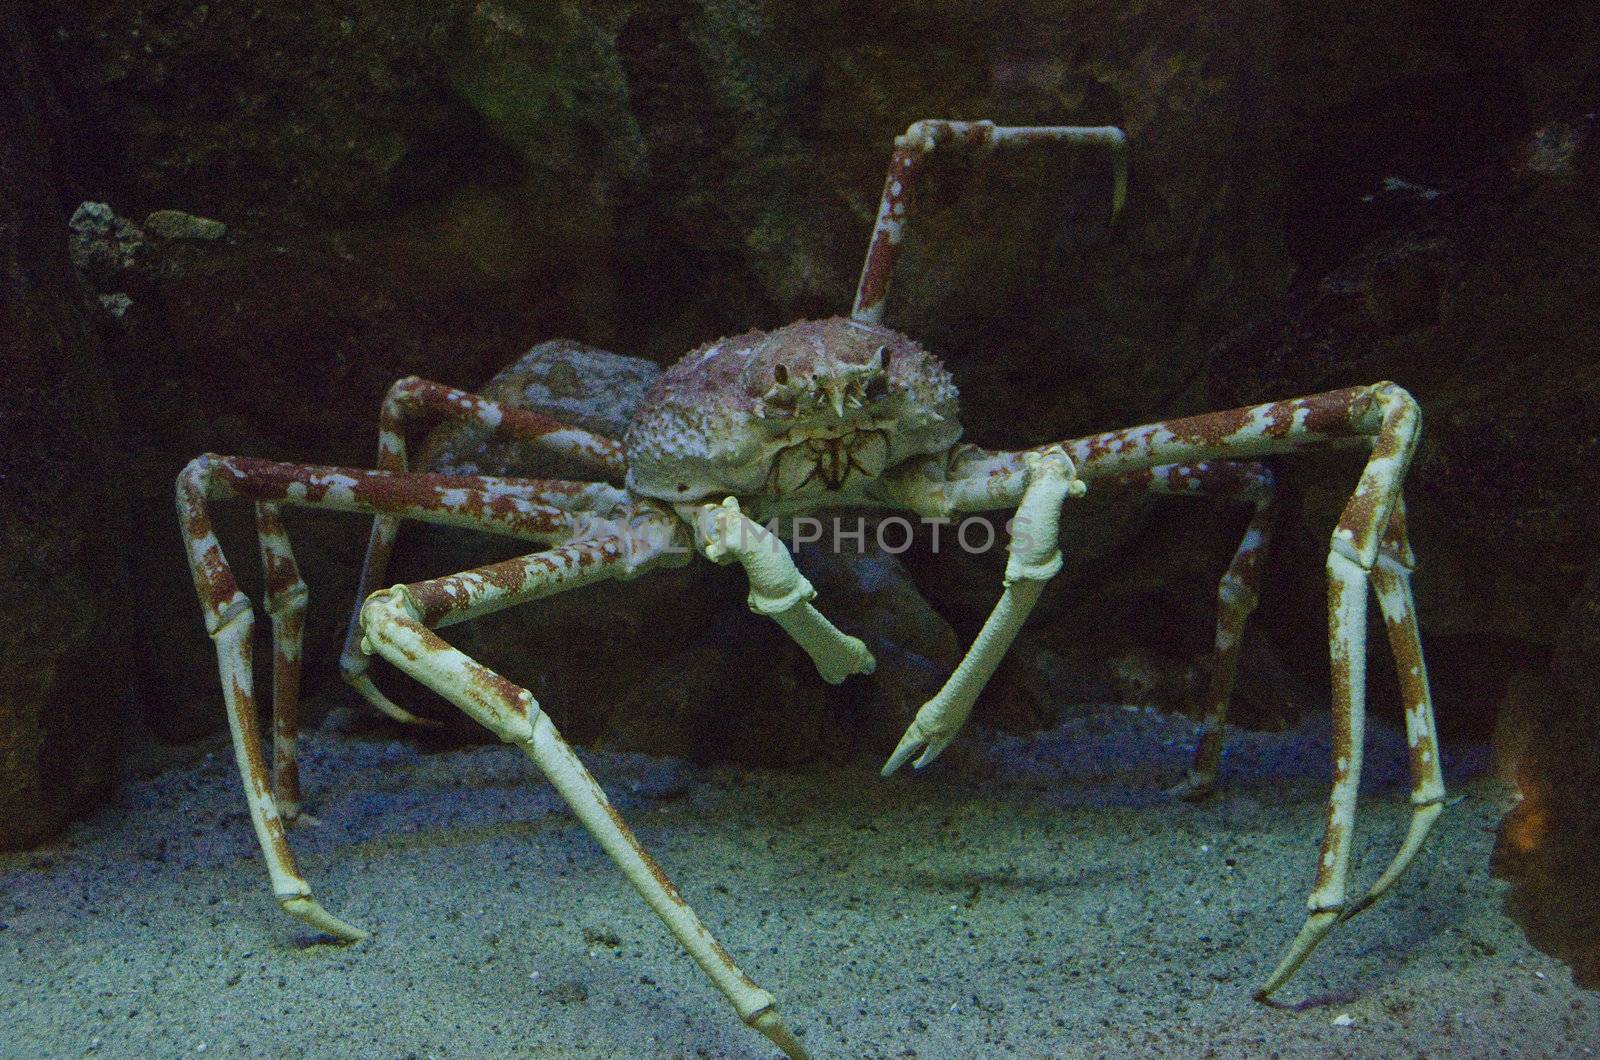 Japanese spider crab under water in an aquarium in Japan 